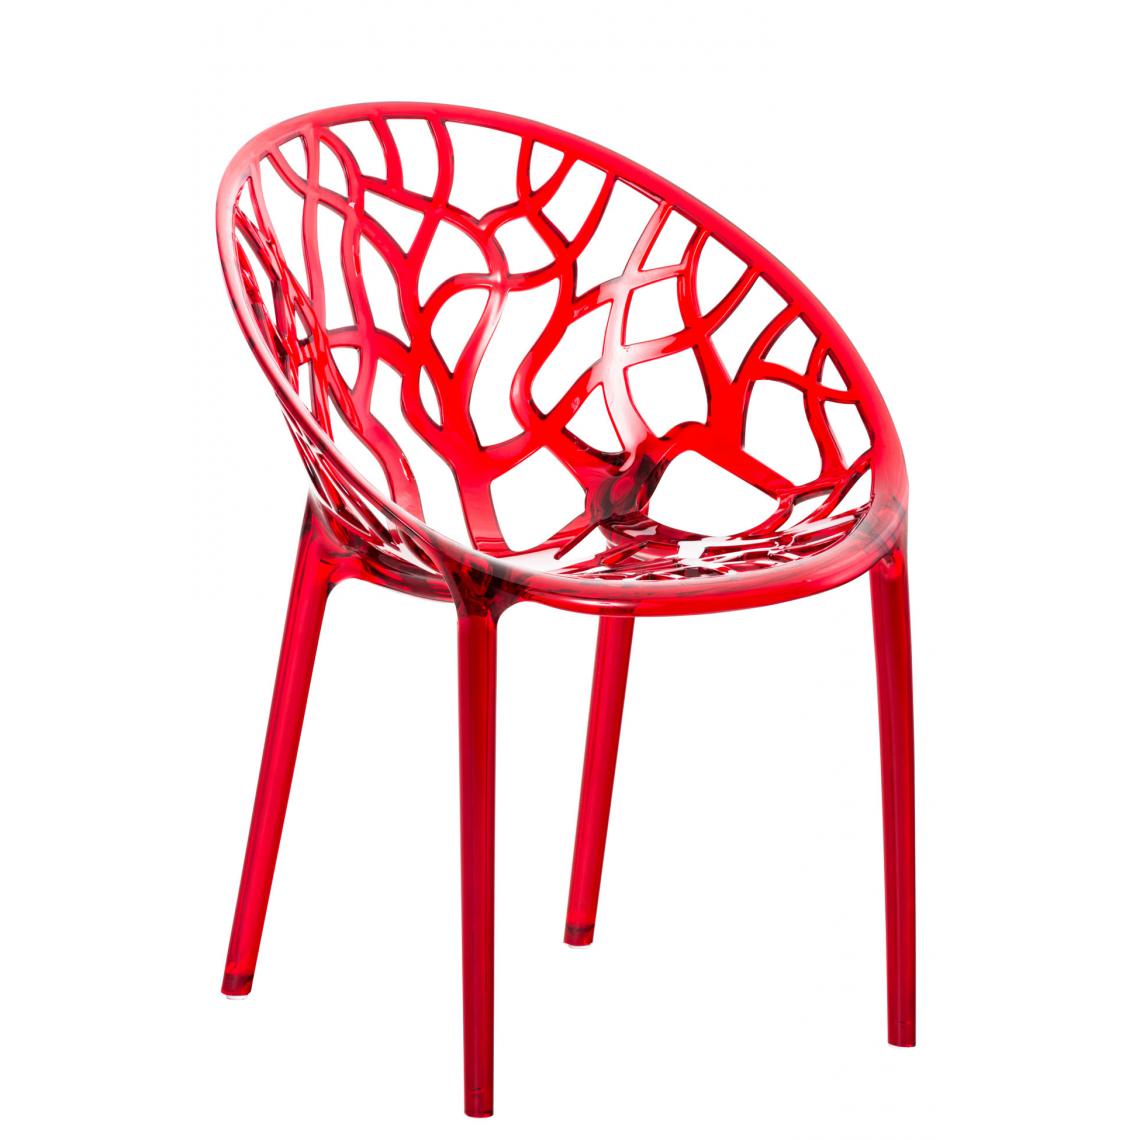 Icaverne - sublime Chaise empilable categorie Banjul couleur rouge - Tabourets